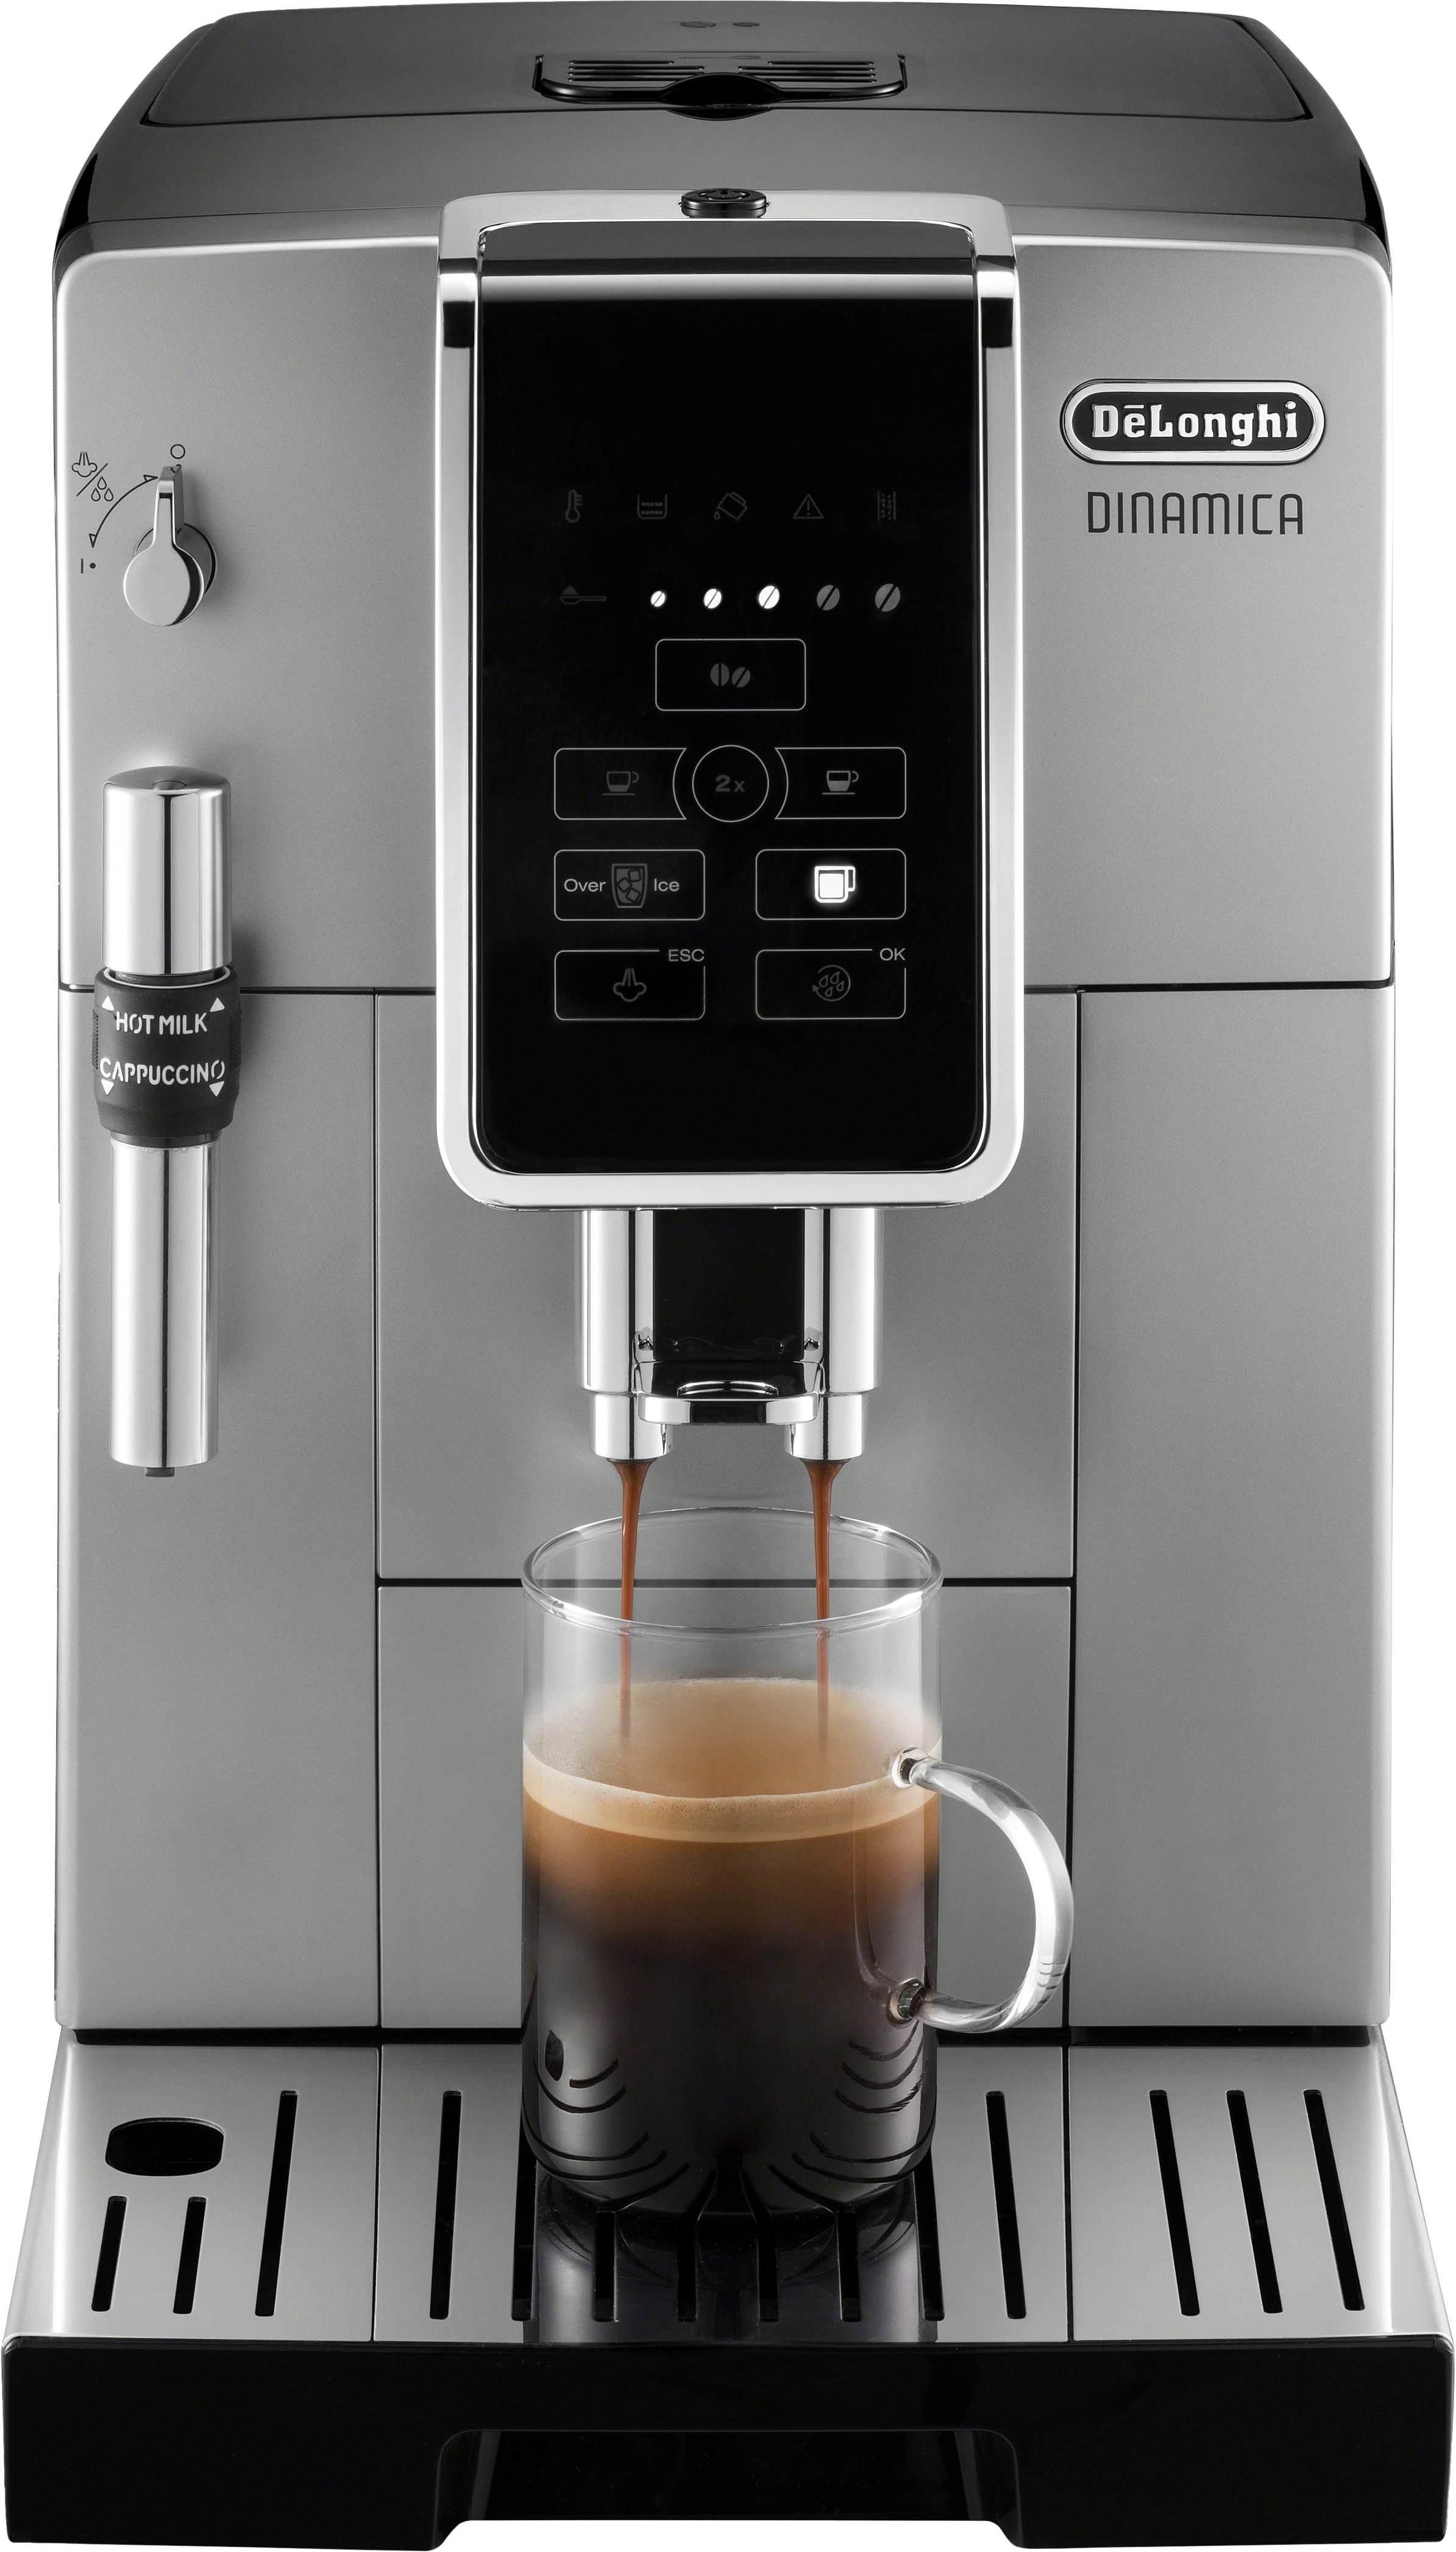 De'Longhi 8-Cup Coffee Maker Silver Metallic ICM17270 - Best Buy